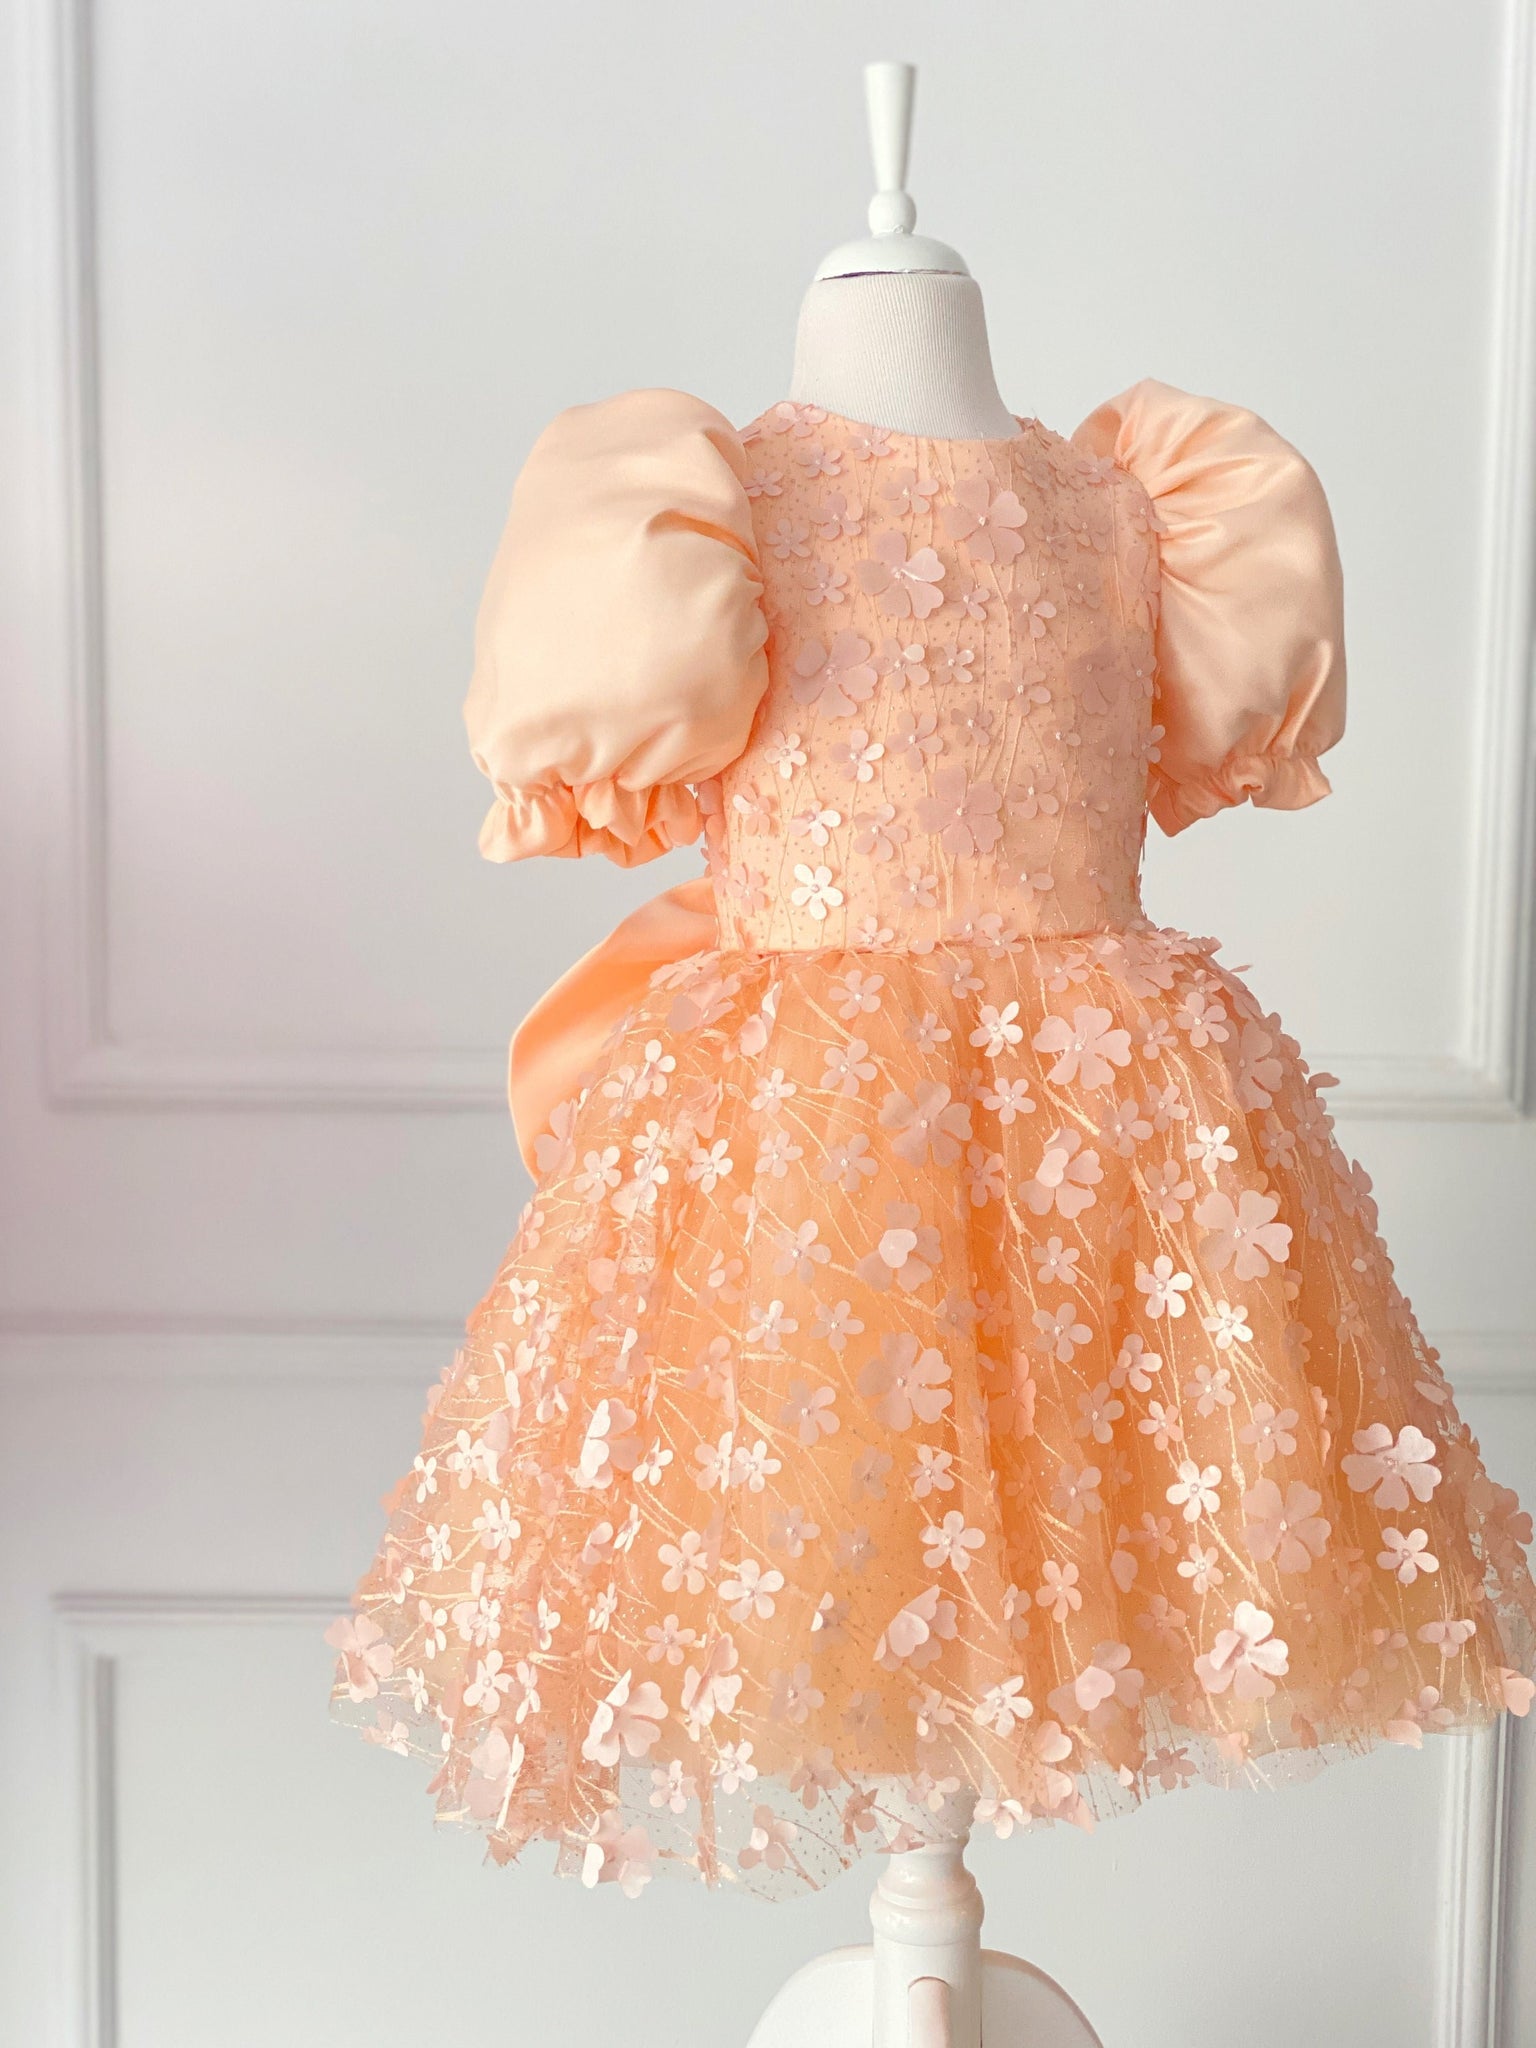 Salmon Fancy Flower Girl Birthday Dress, Toddler Wedding Dress, Infant Speacial Day Dress, Flower Gown, Photoshoot Girl Dress, Salmon Gown